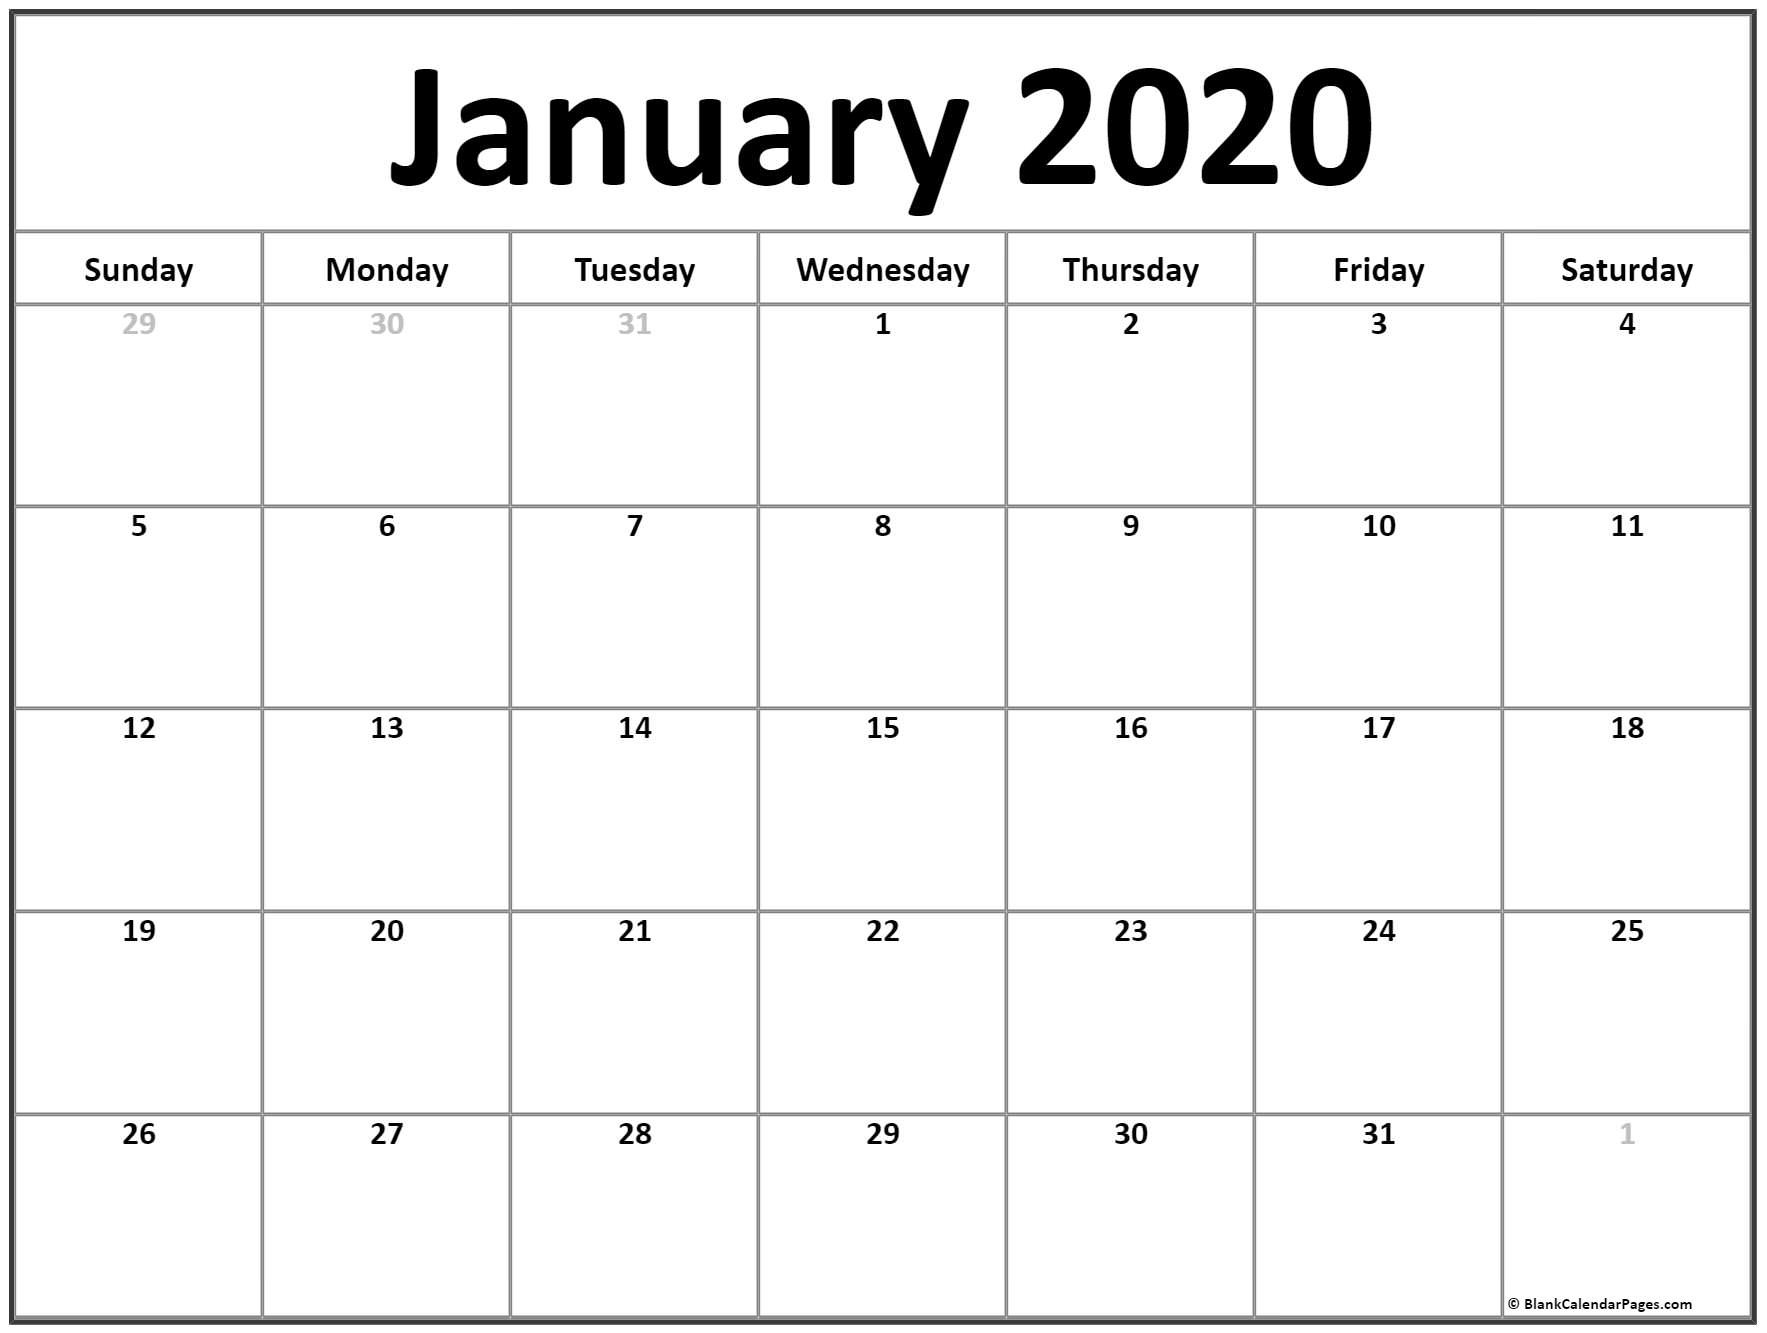 January 2020 Calendar | Free Printable Monthly Calendars-January 2020 School Calendar